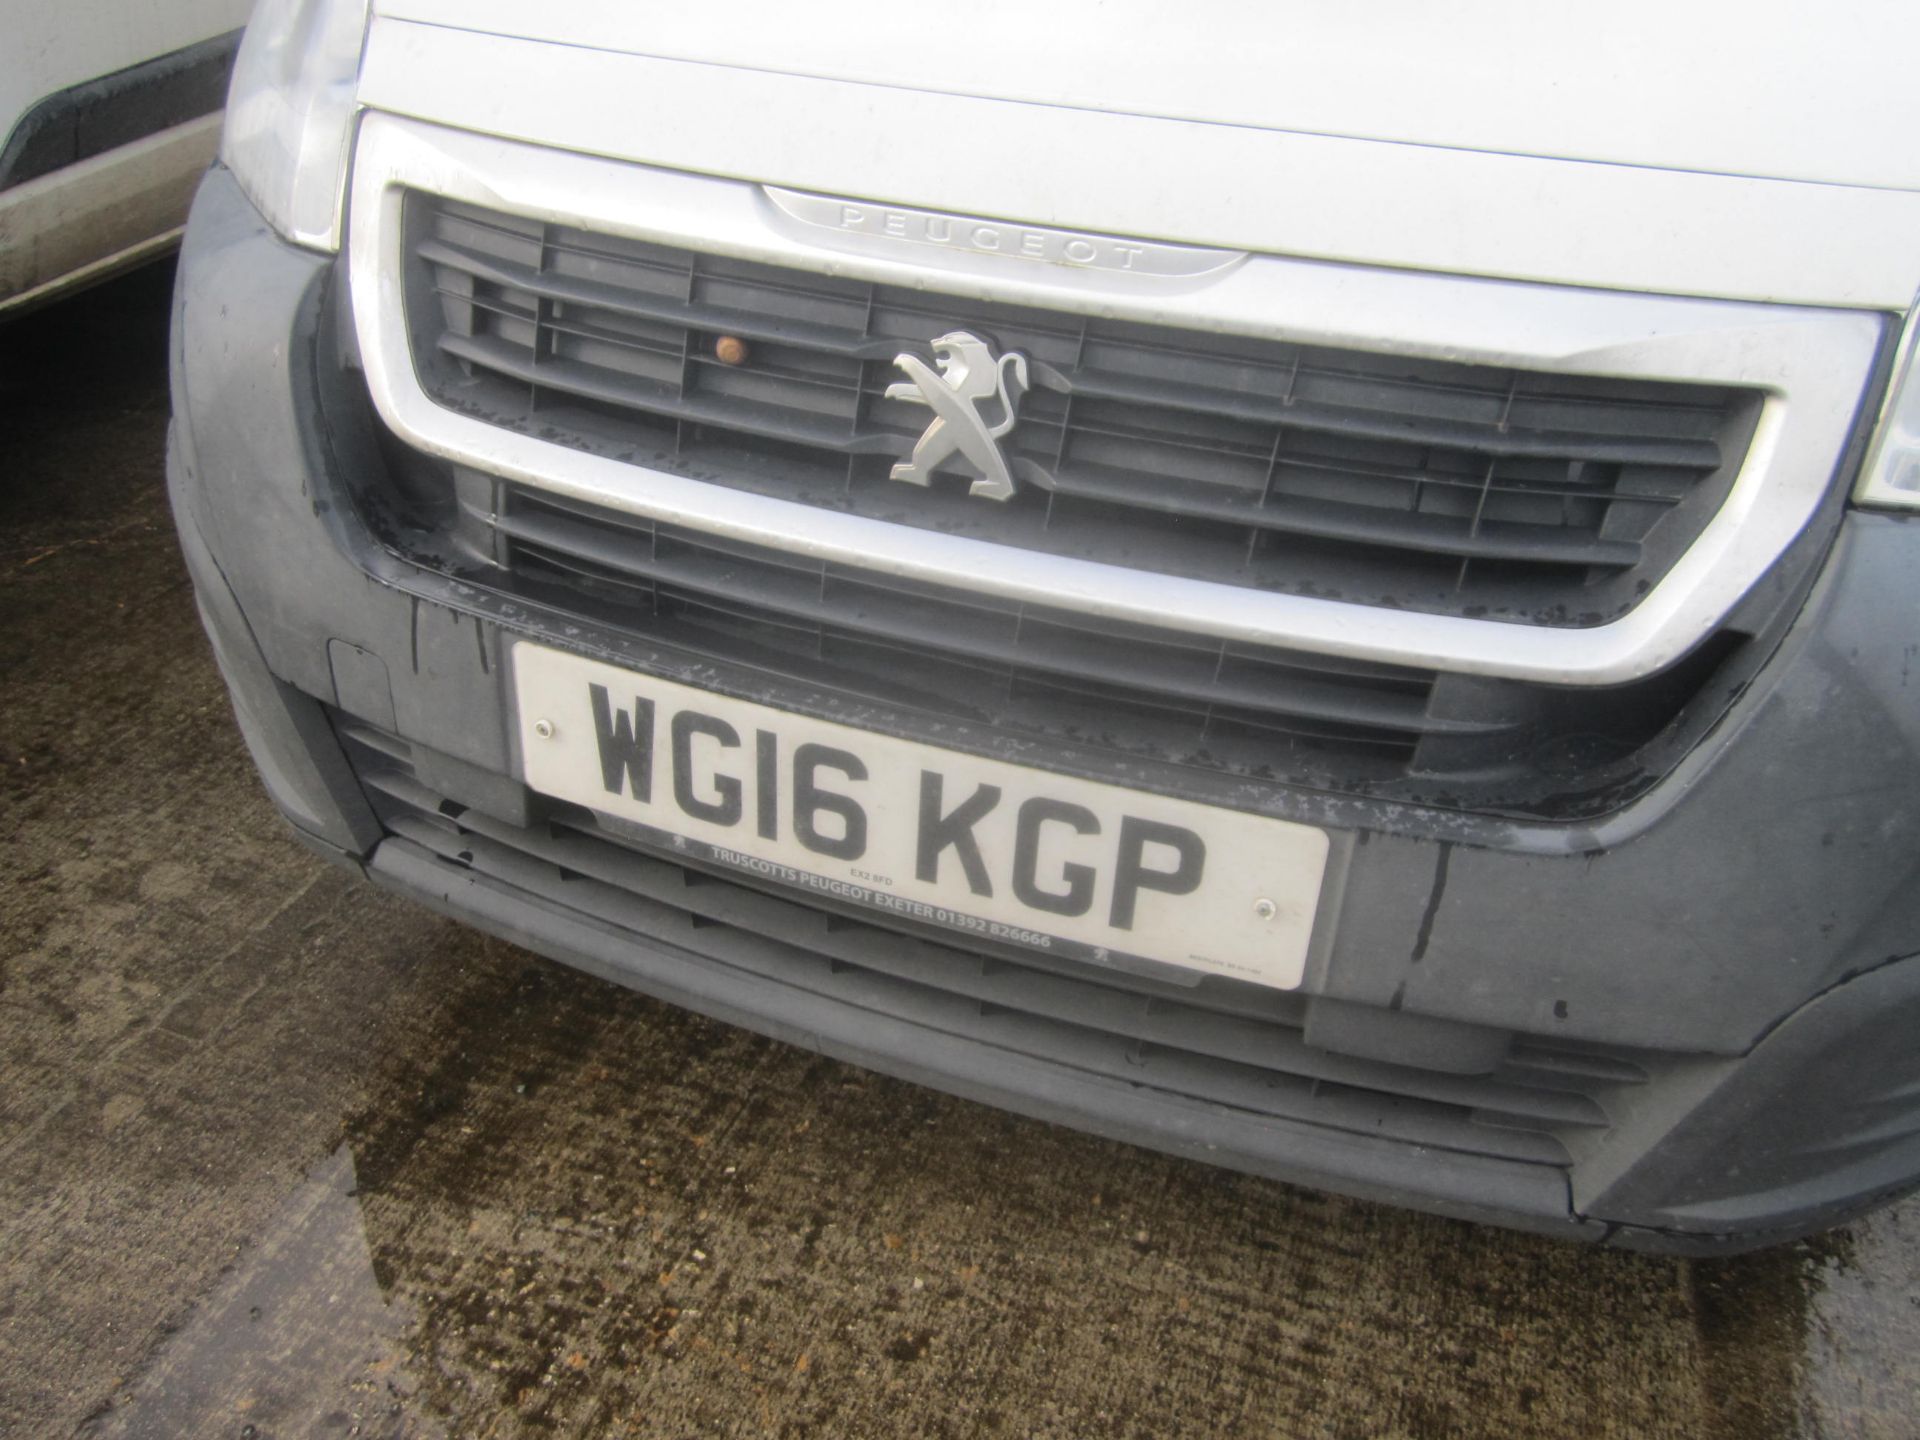 Peugeot Partner L1 625 1.6 HDi 75 Professional van, reg no. WG16 KGP, recorded mileage 81,000 ( - Image 4 of 14